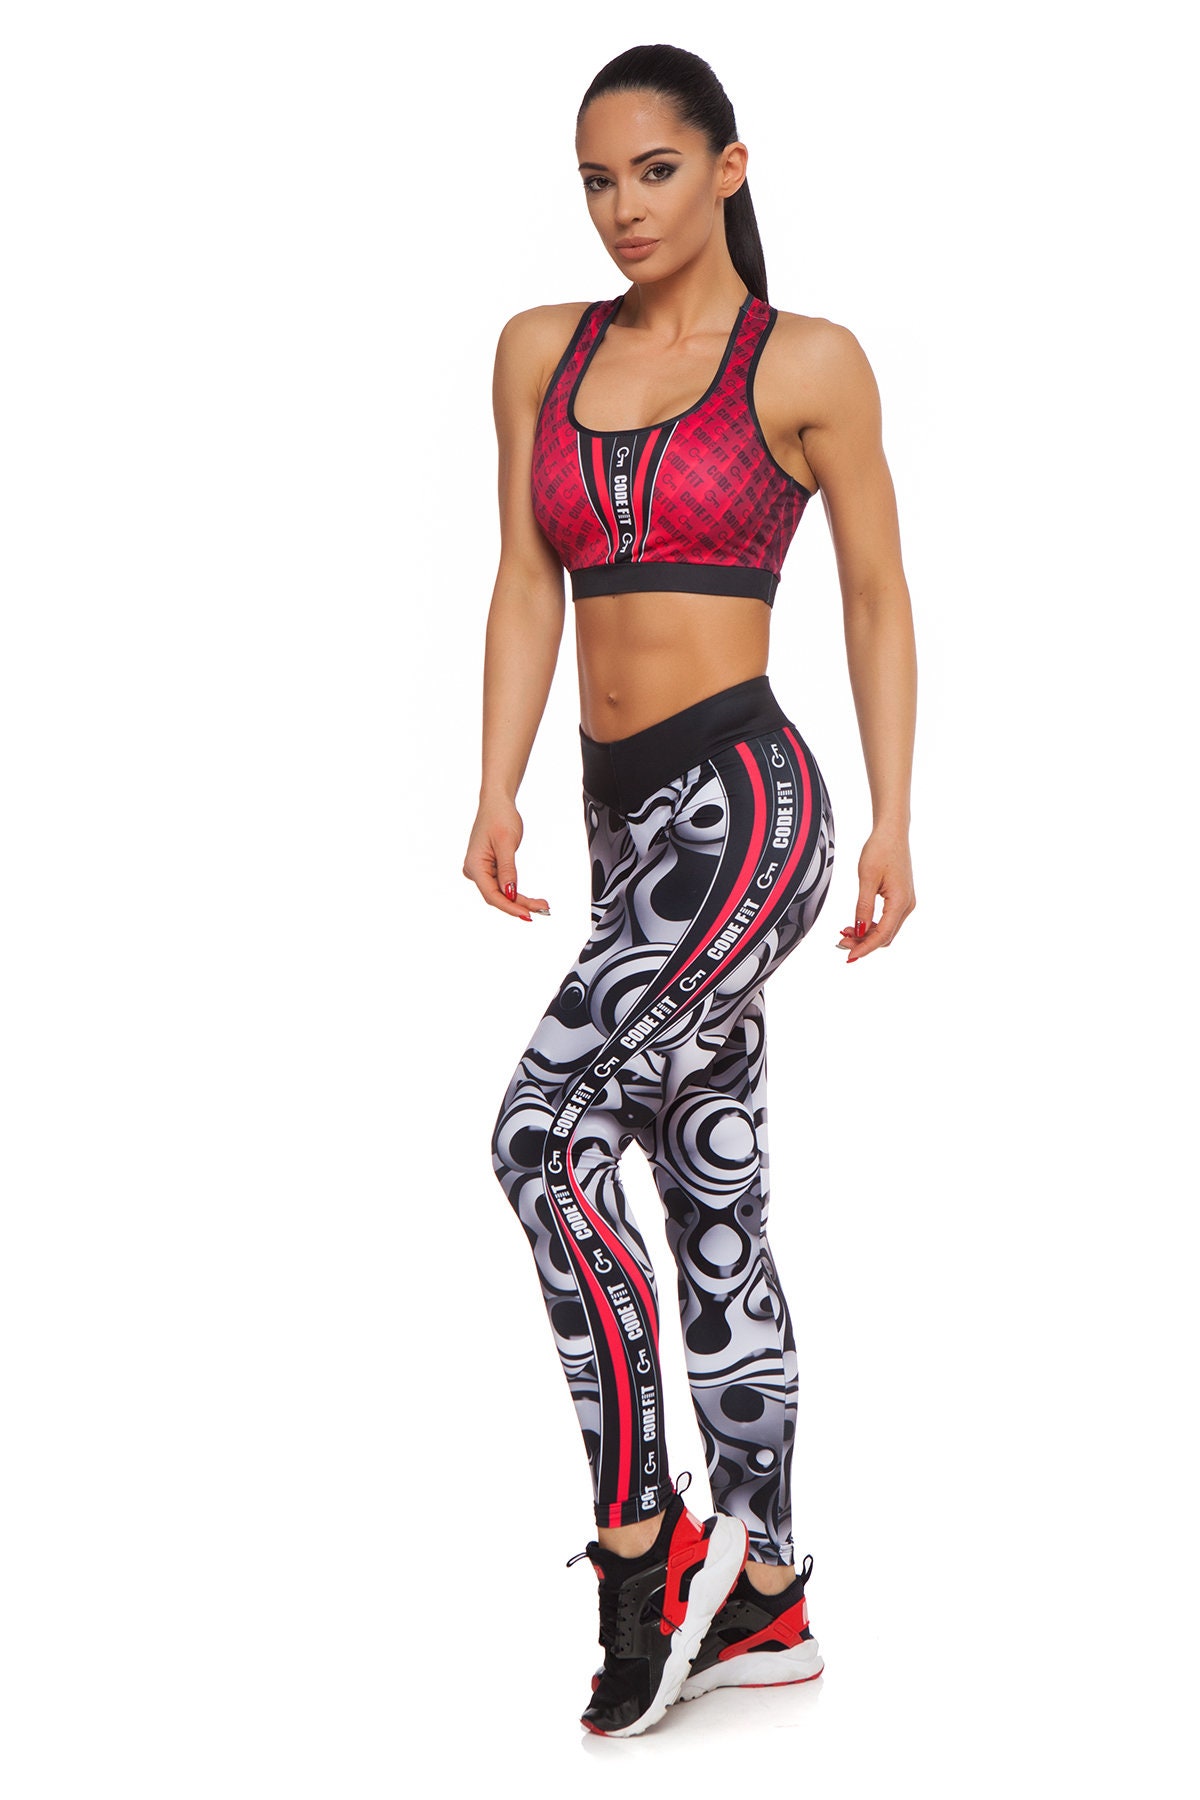 Red Printed Workout Bra, High Impact Training Top, Push up Yoga